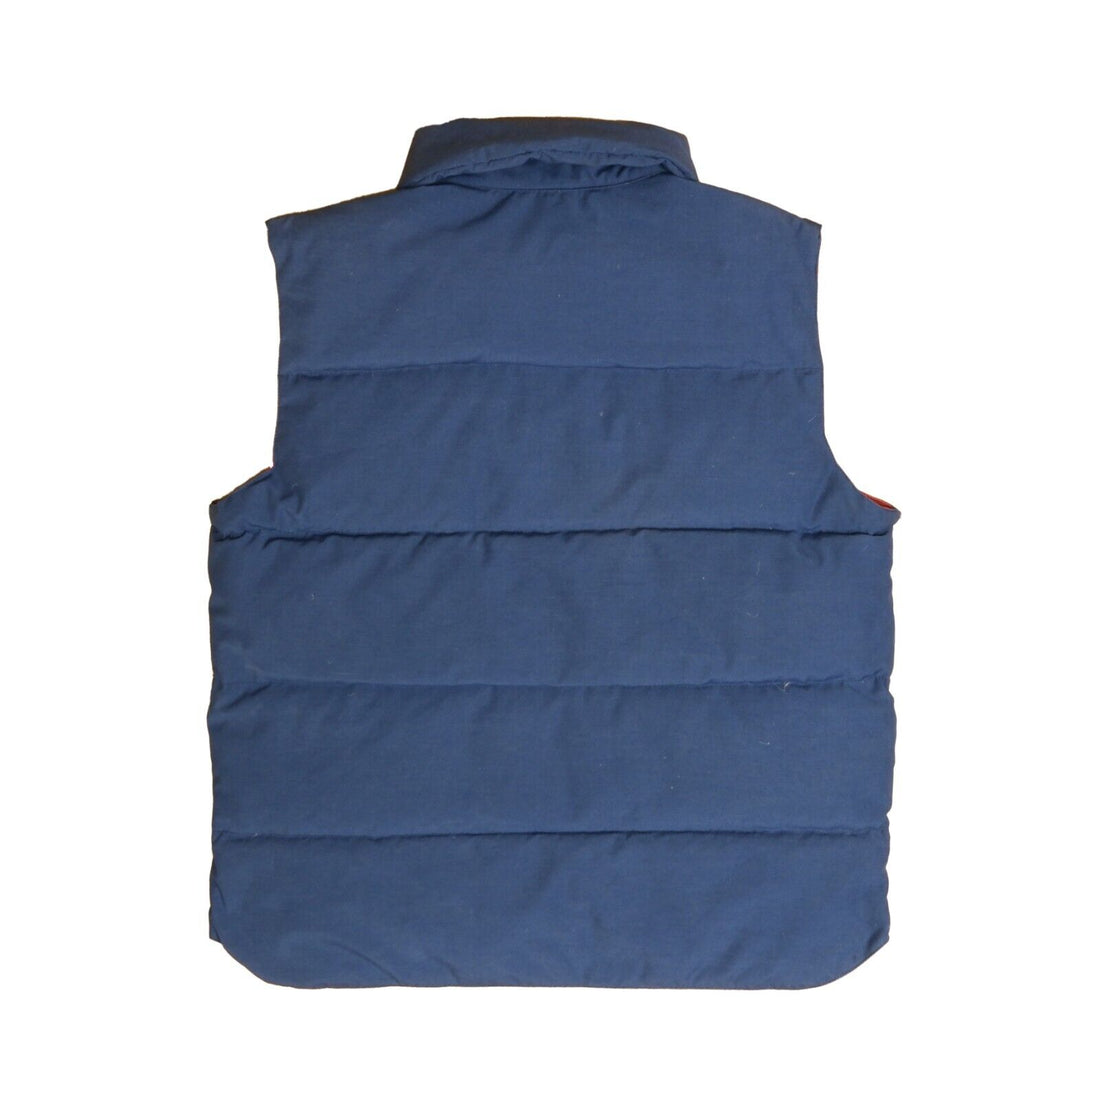 Vintage JC Penney Puffer Vest Jacket Size Medium Blue Insulated